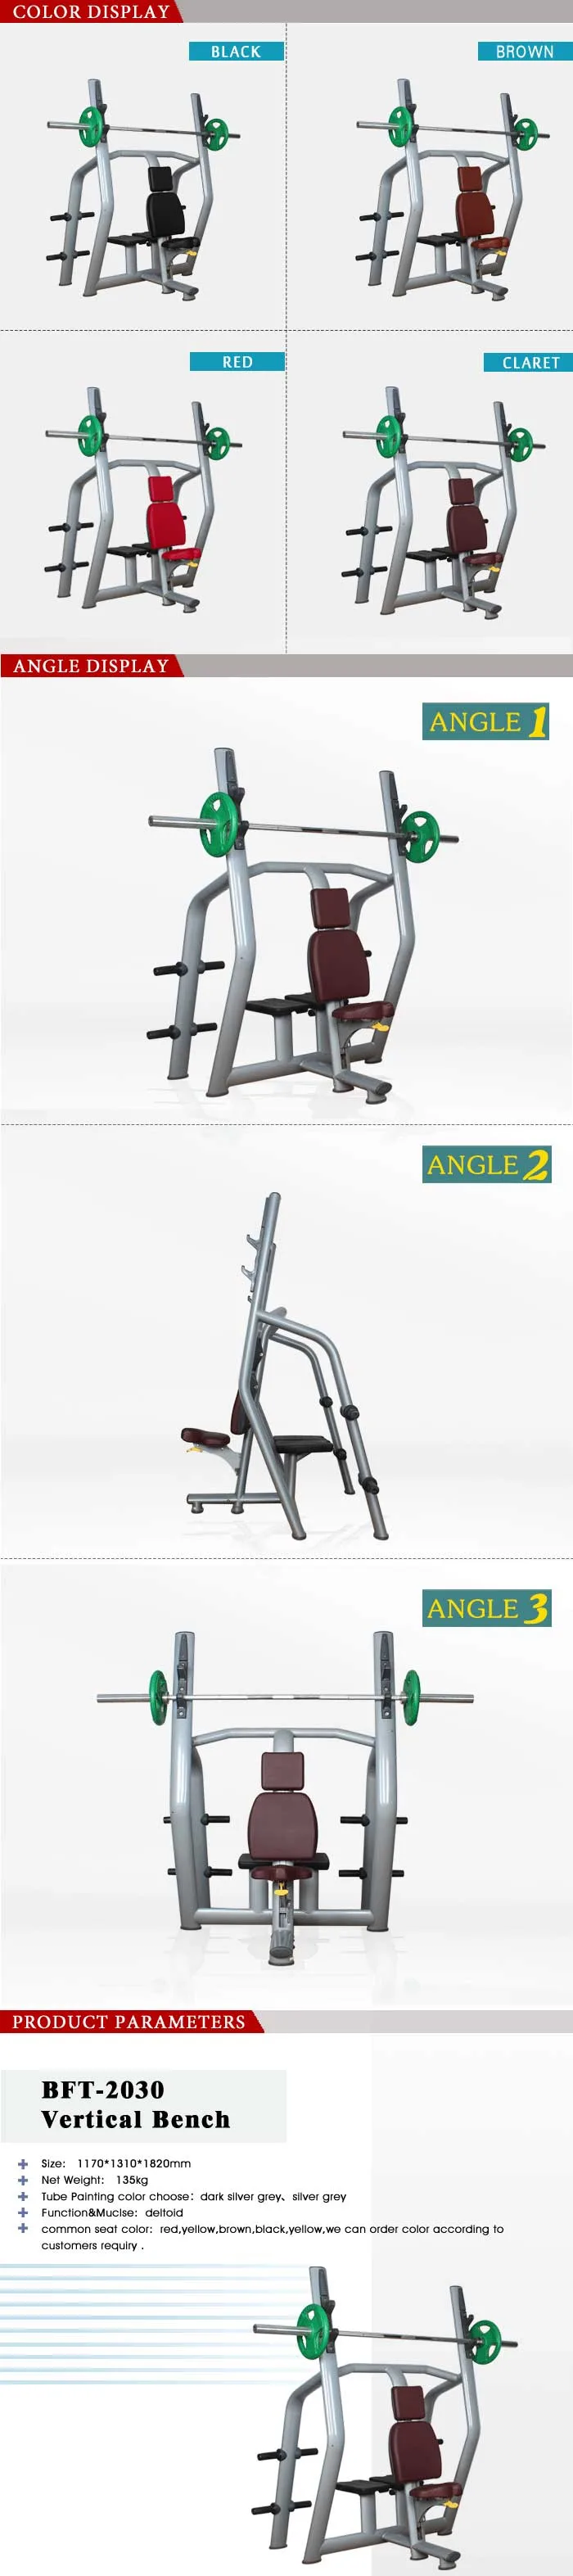 Vertical Bench/ Exercise Weight Bench/ Gym Shoulder Bench (BFT-2030)